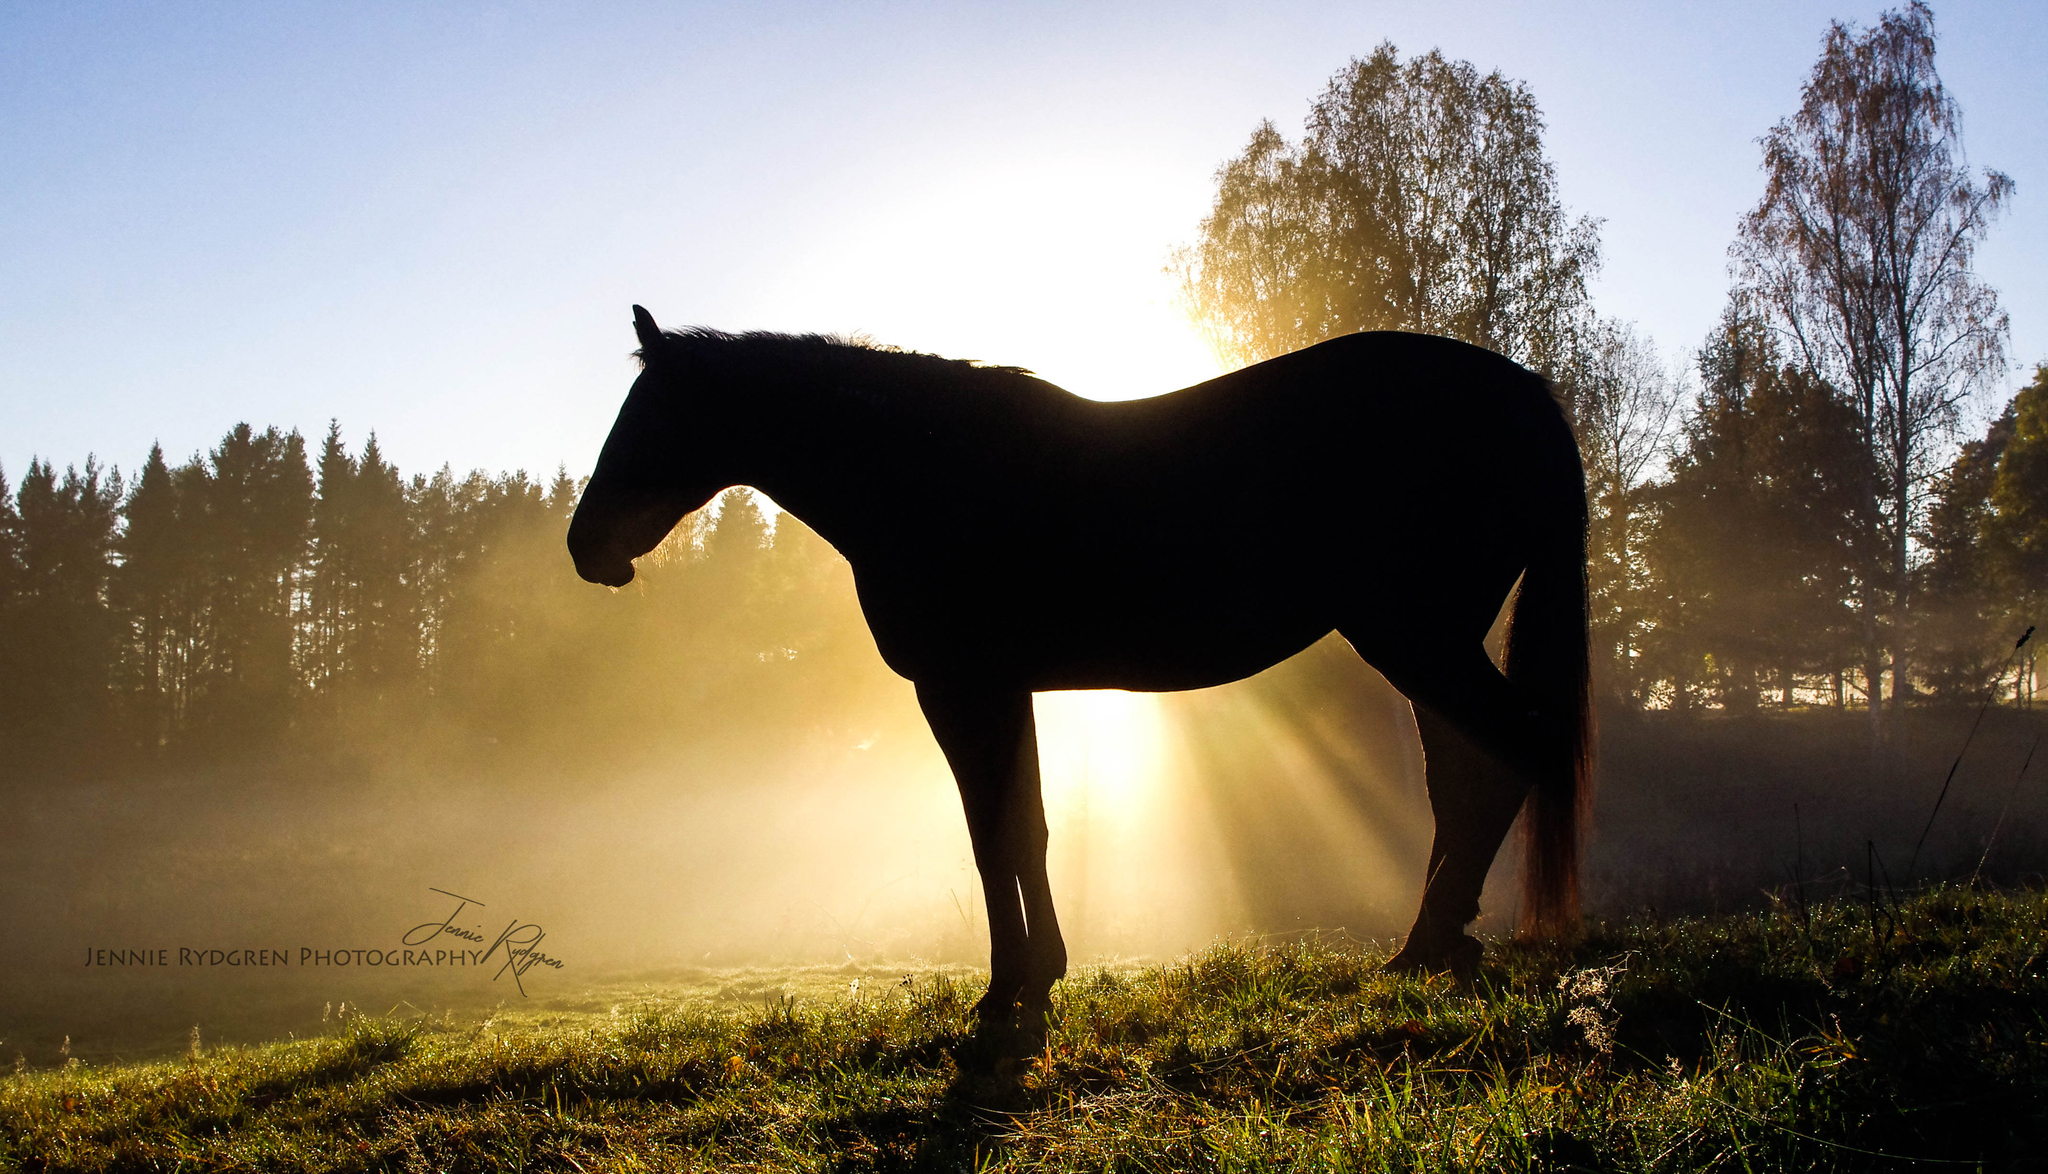 TAVLA | Häst i solljus